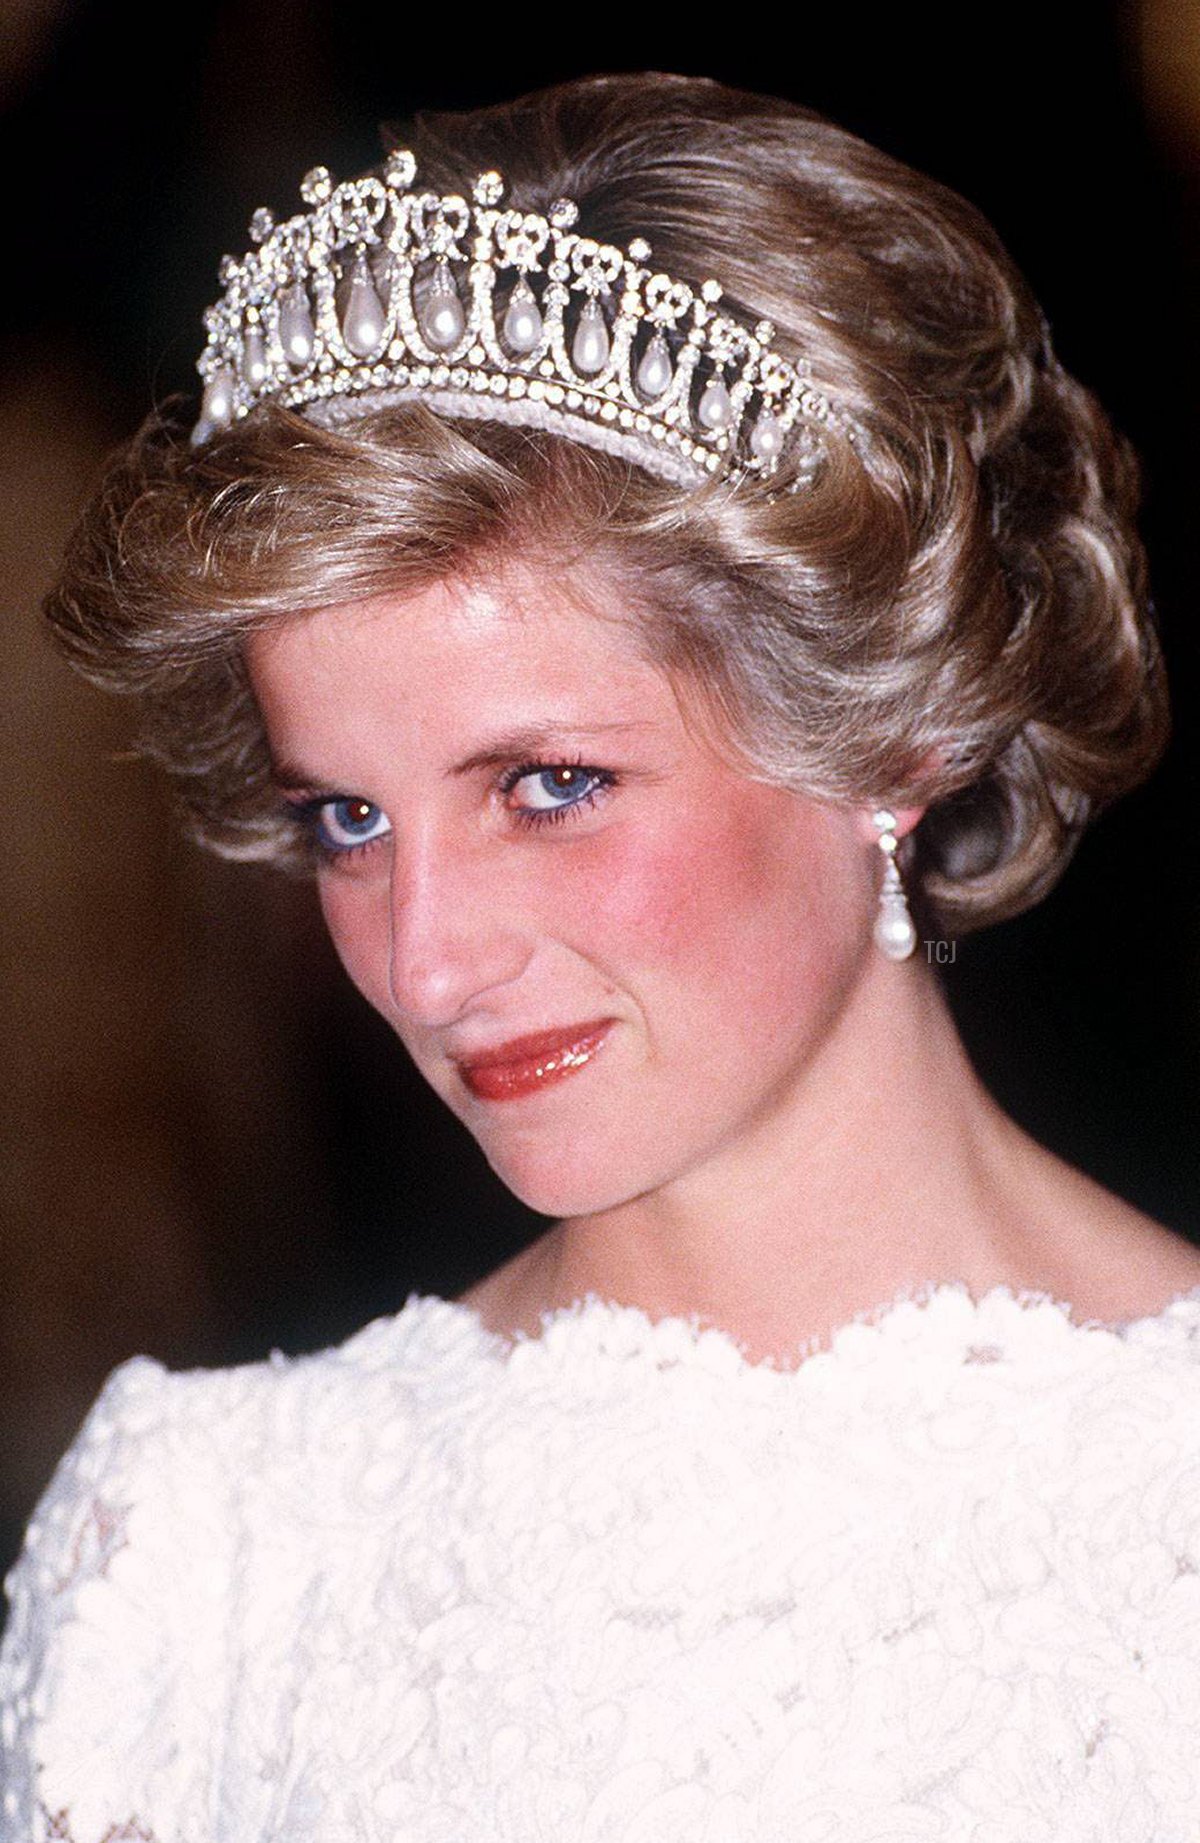 Princess Diana at the British Embassy in Washington wearing tiara